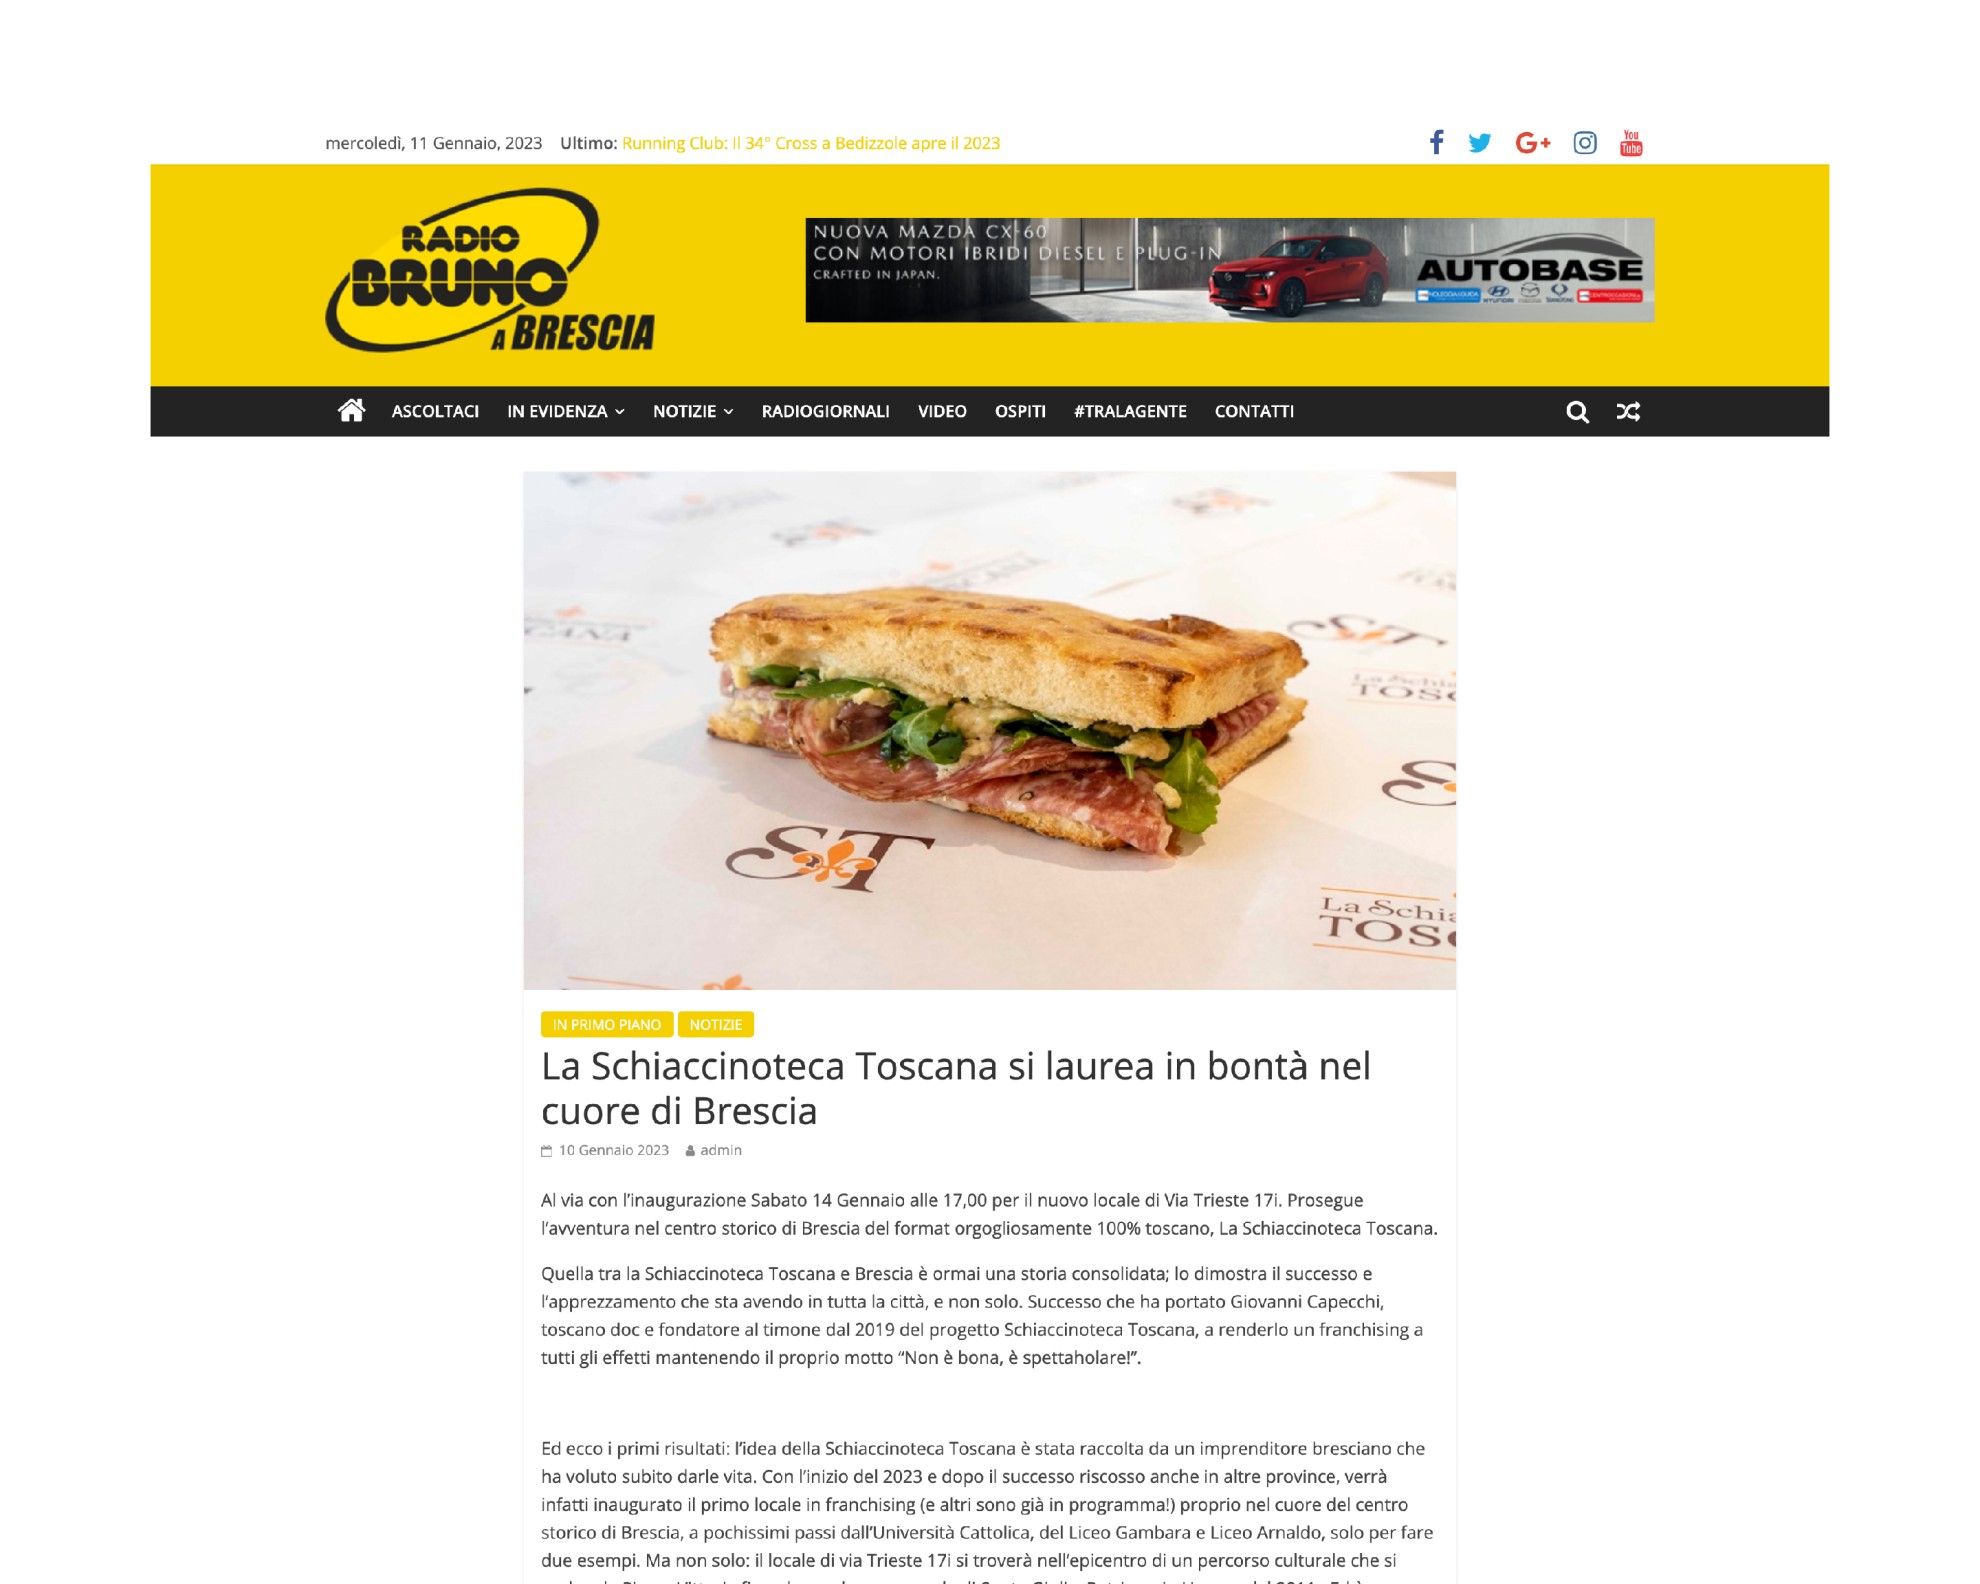 Radio Bruno | Rassegna stampa | La Schiaccinoteca Toscana